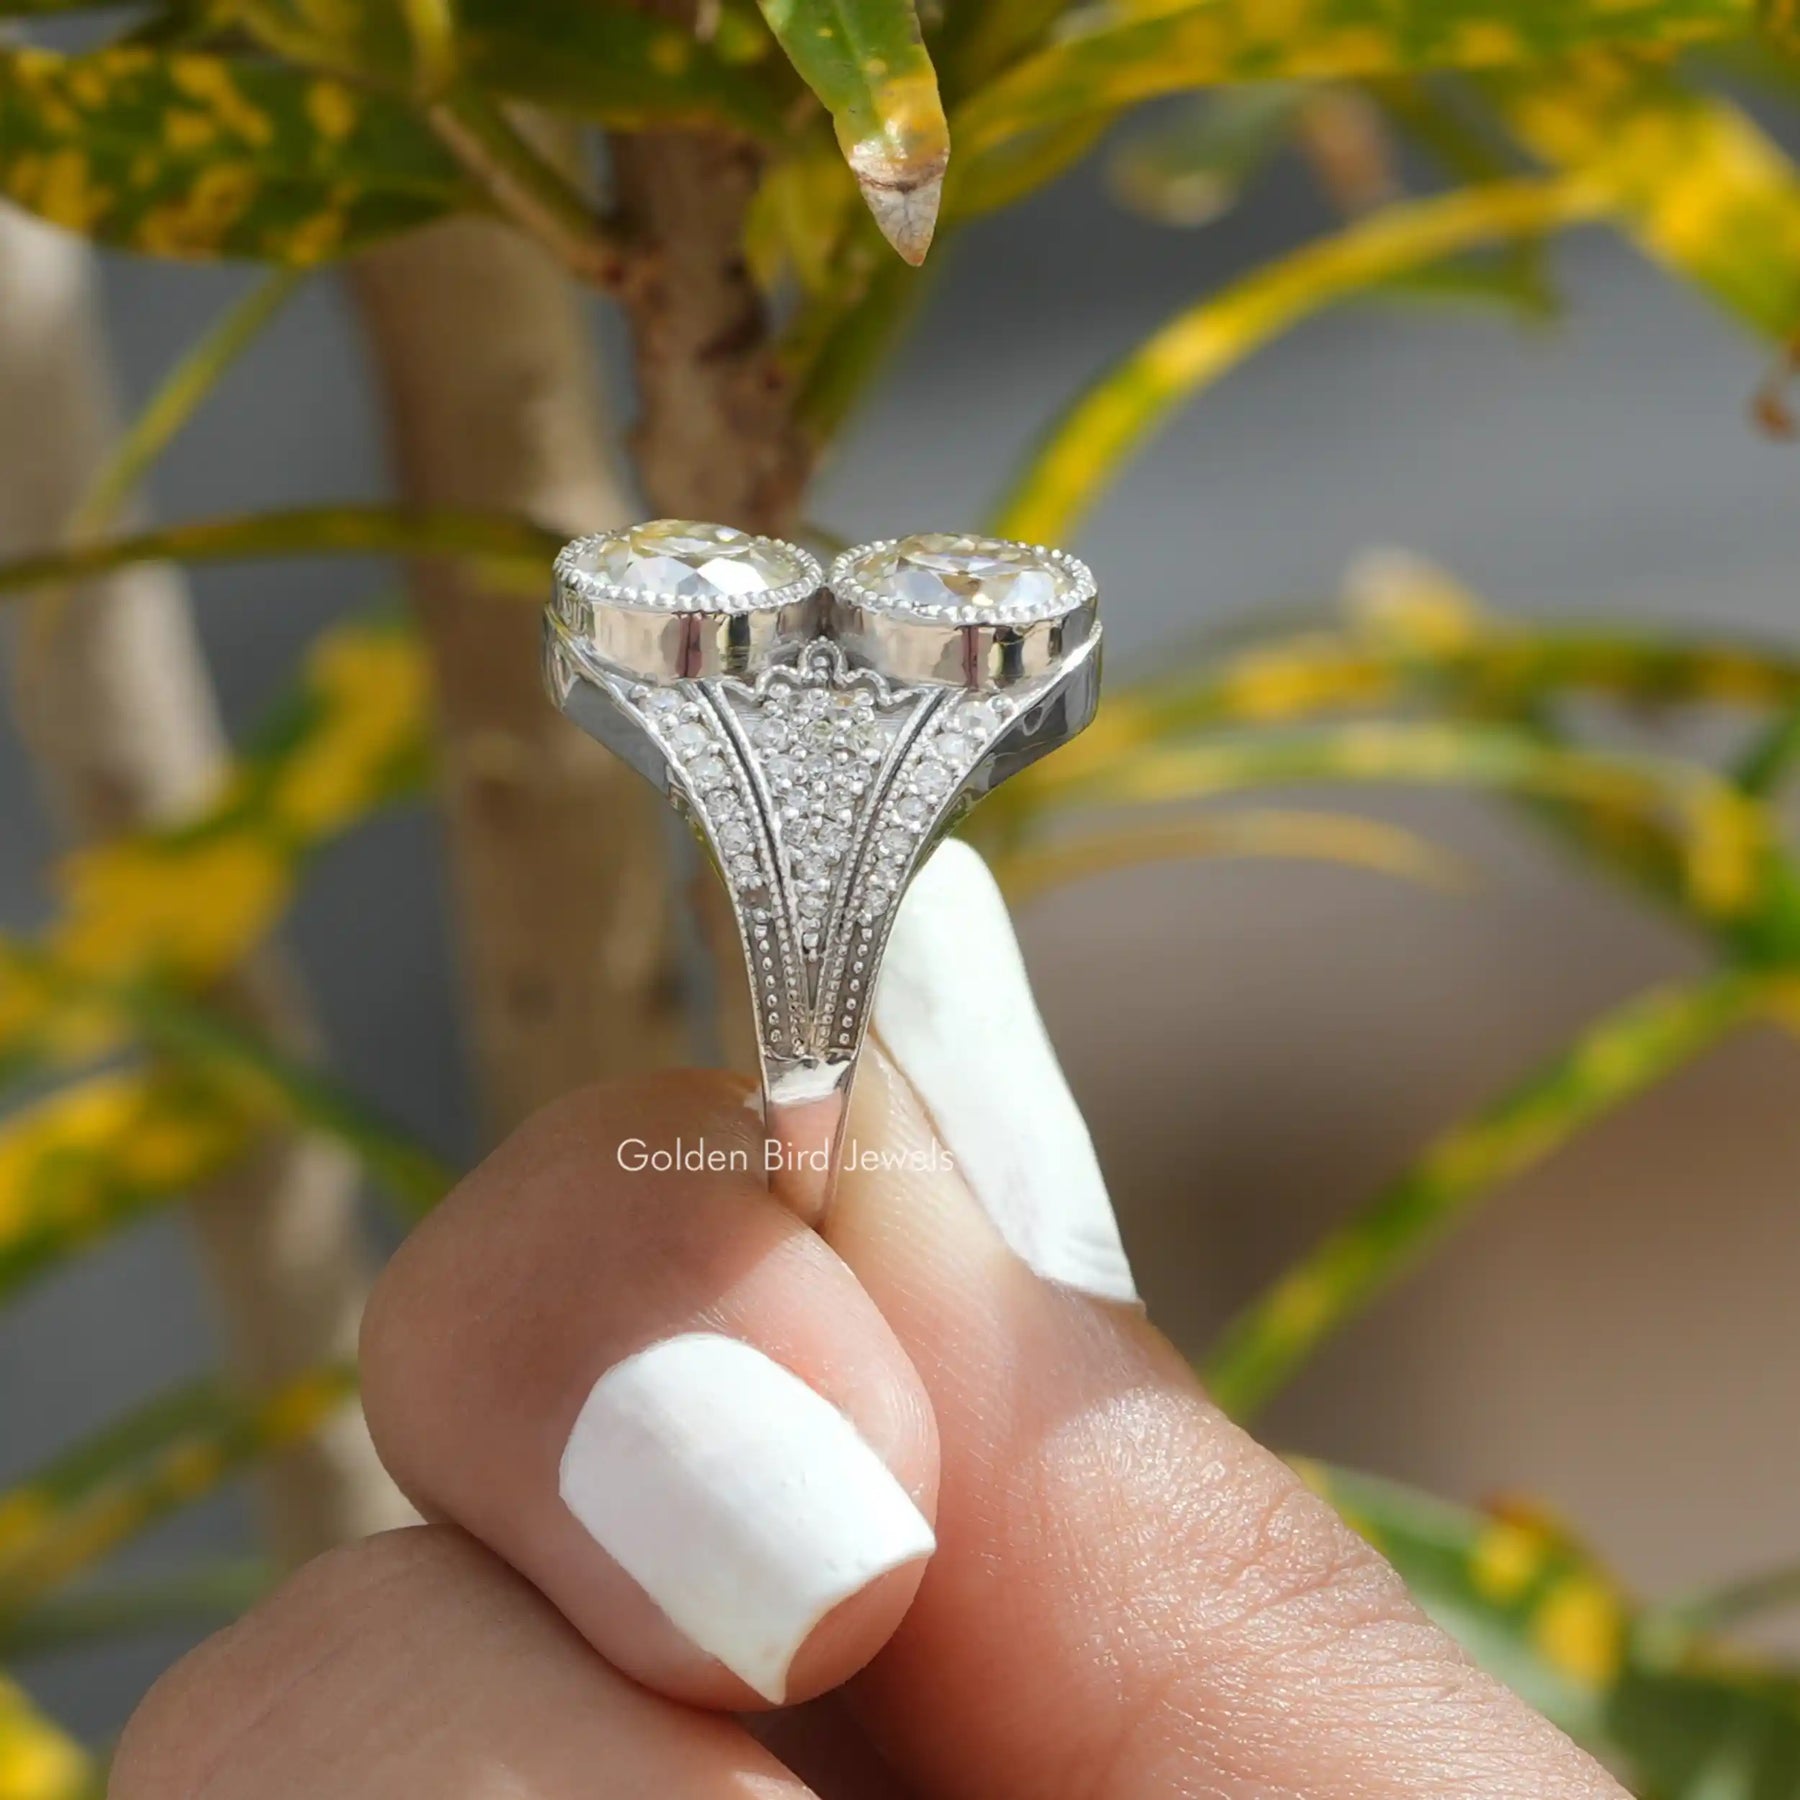 OEC Round Cut Moissanite Vintage Engagement Ring